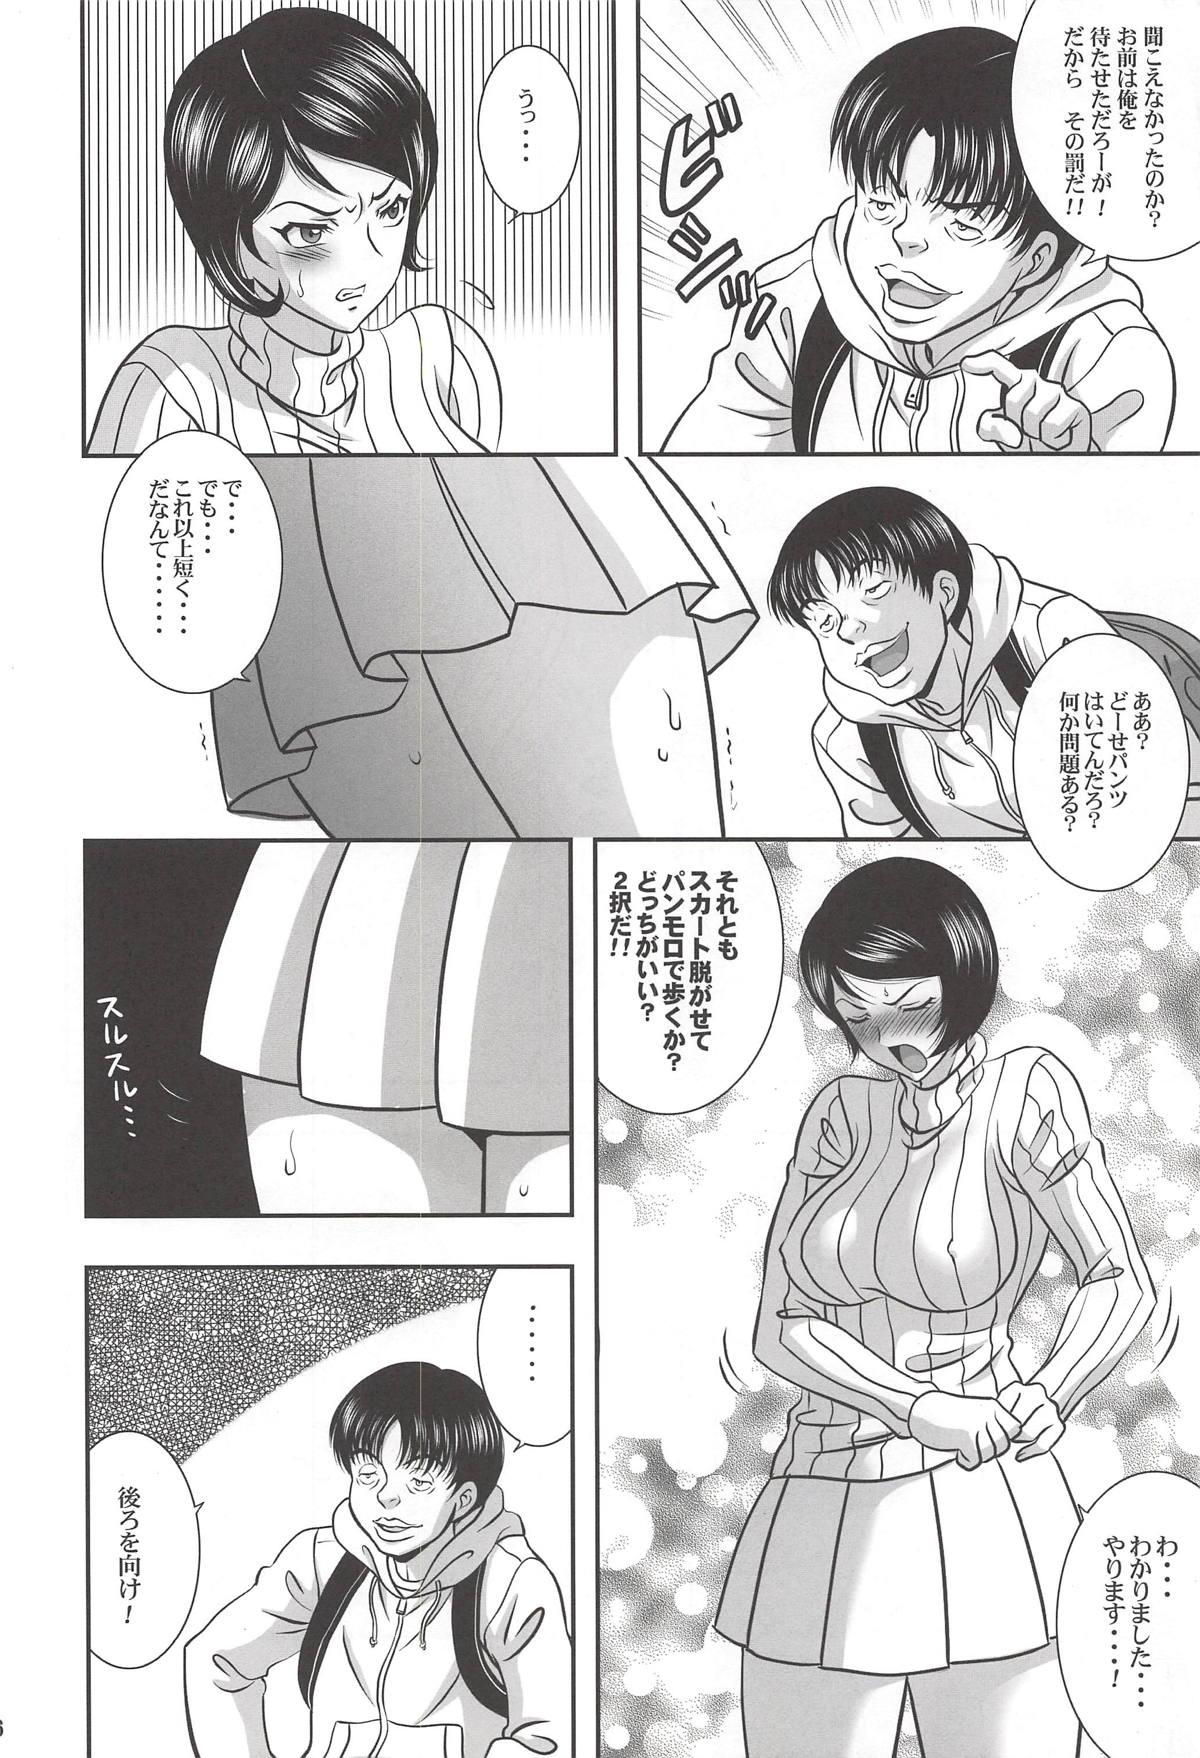 Teensex ISHIZAWA 05 - Bakuman Goldenshower - Page 5